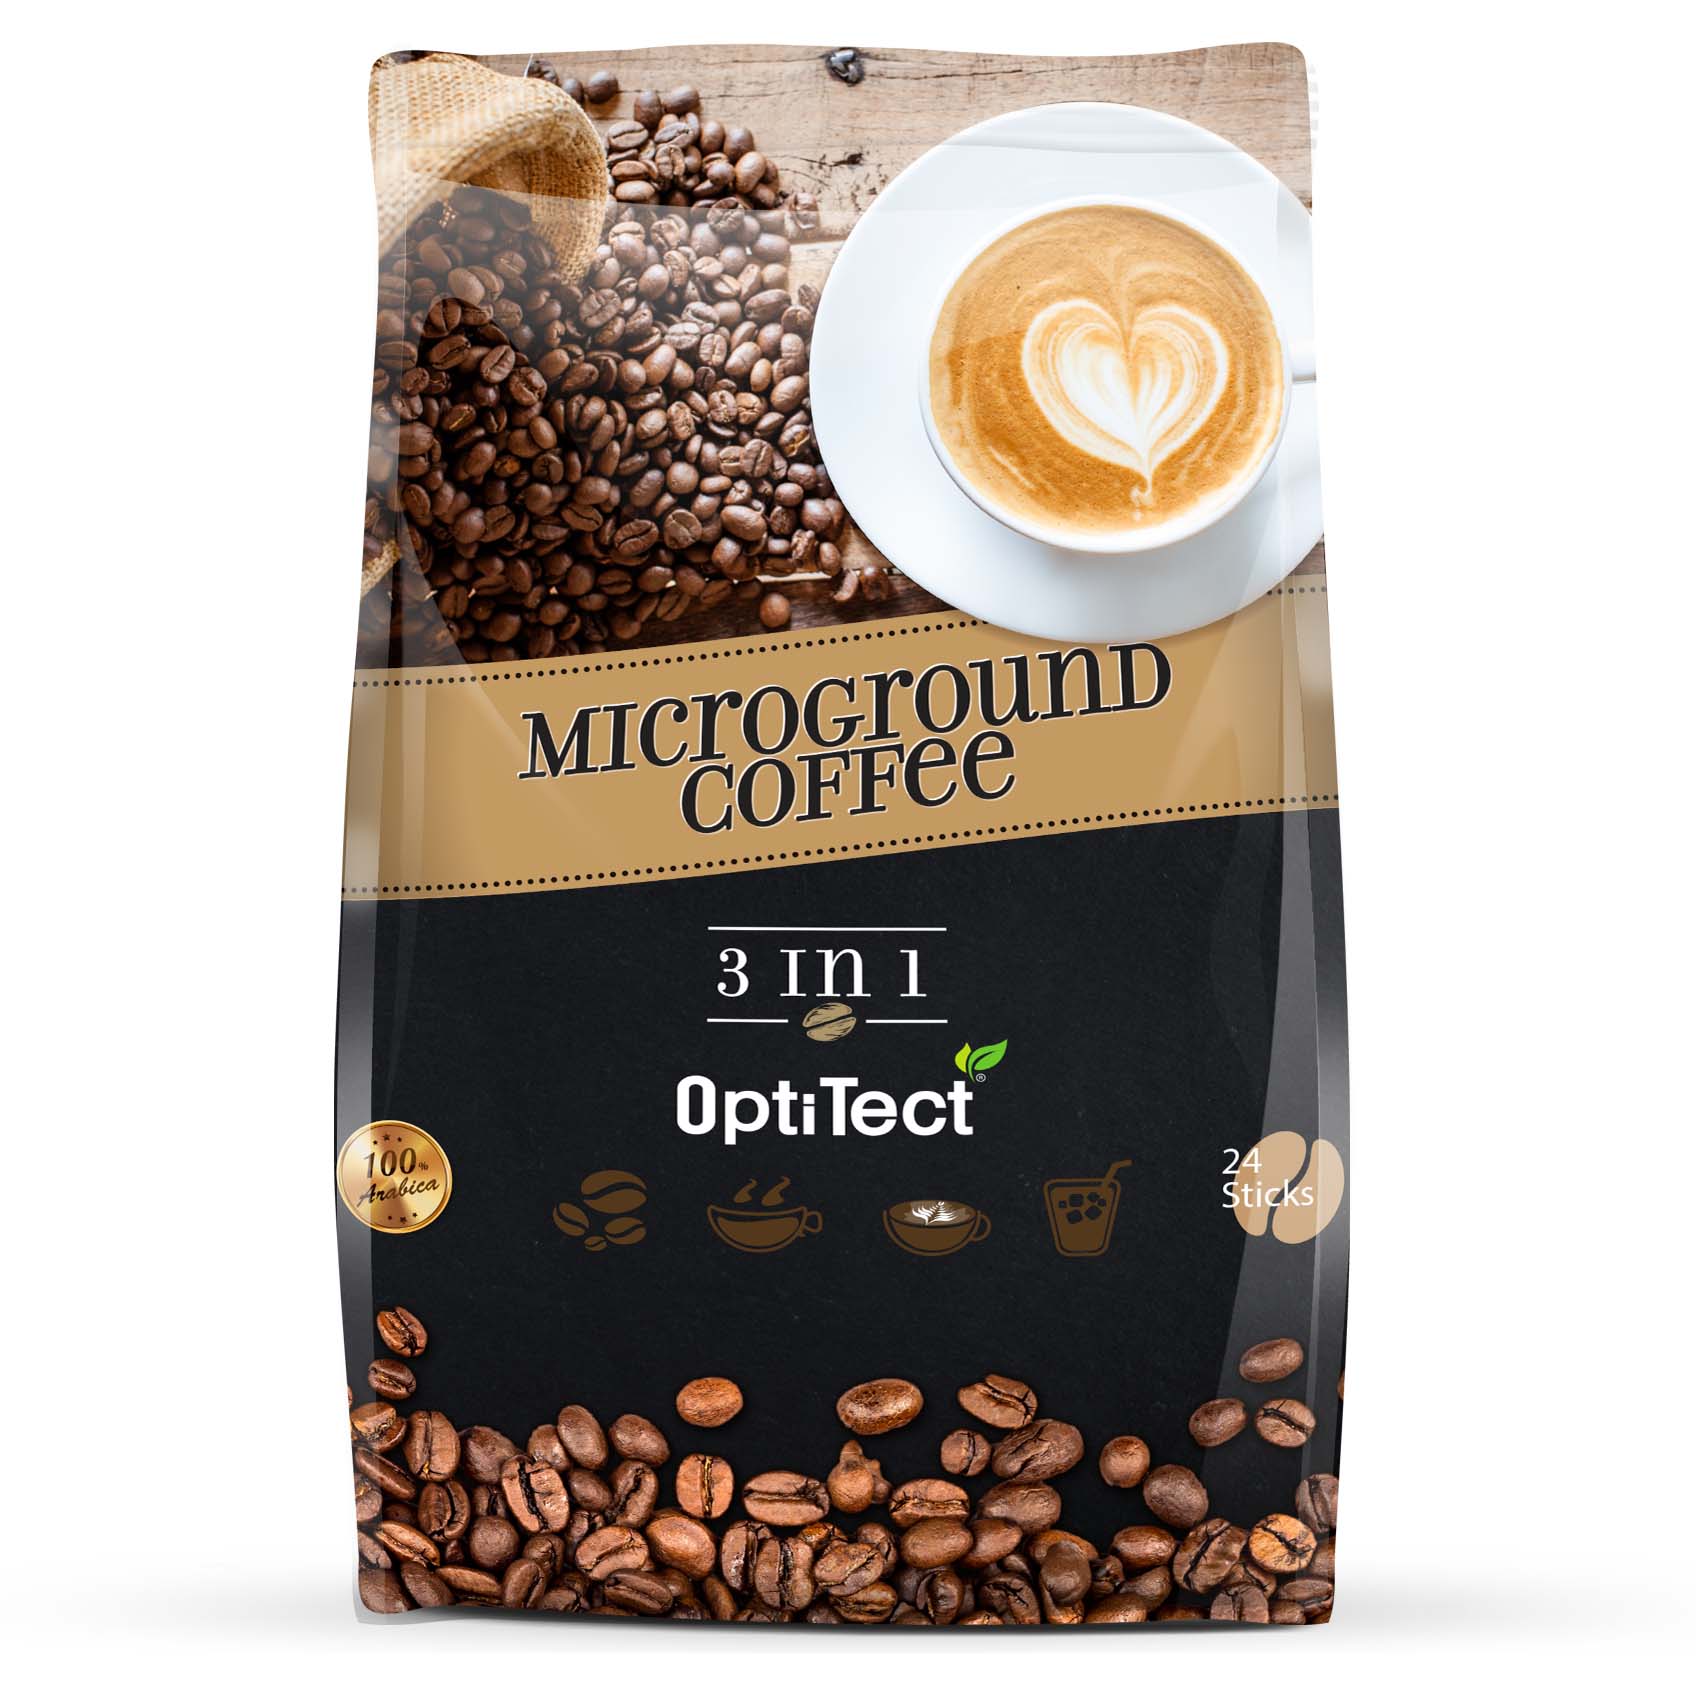 Optitect Arabica Microground Coffee 3 in 1, 24 Stick Packs